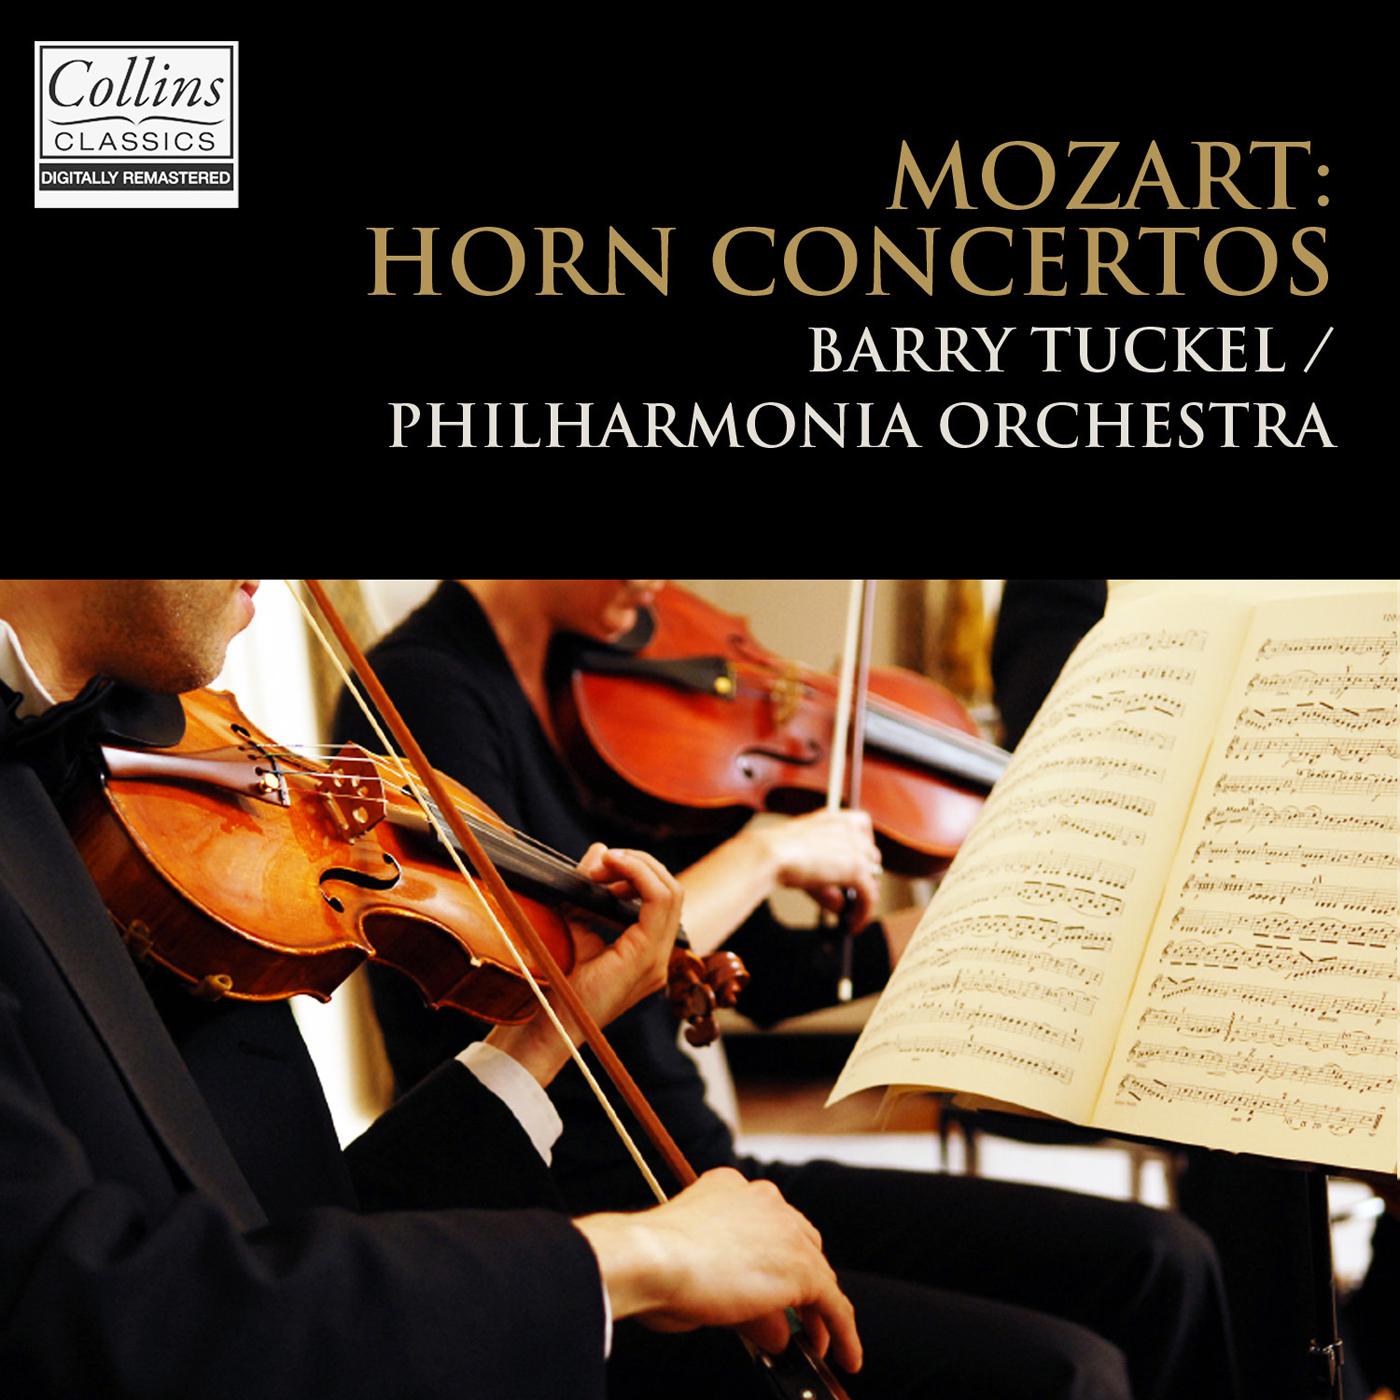 Horn Concerto No. 2 in E-Flat Major, K. 417: I. Allegro maestoso